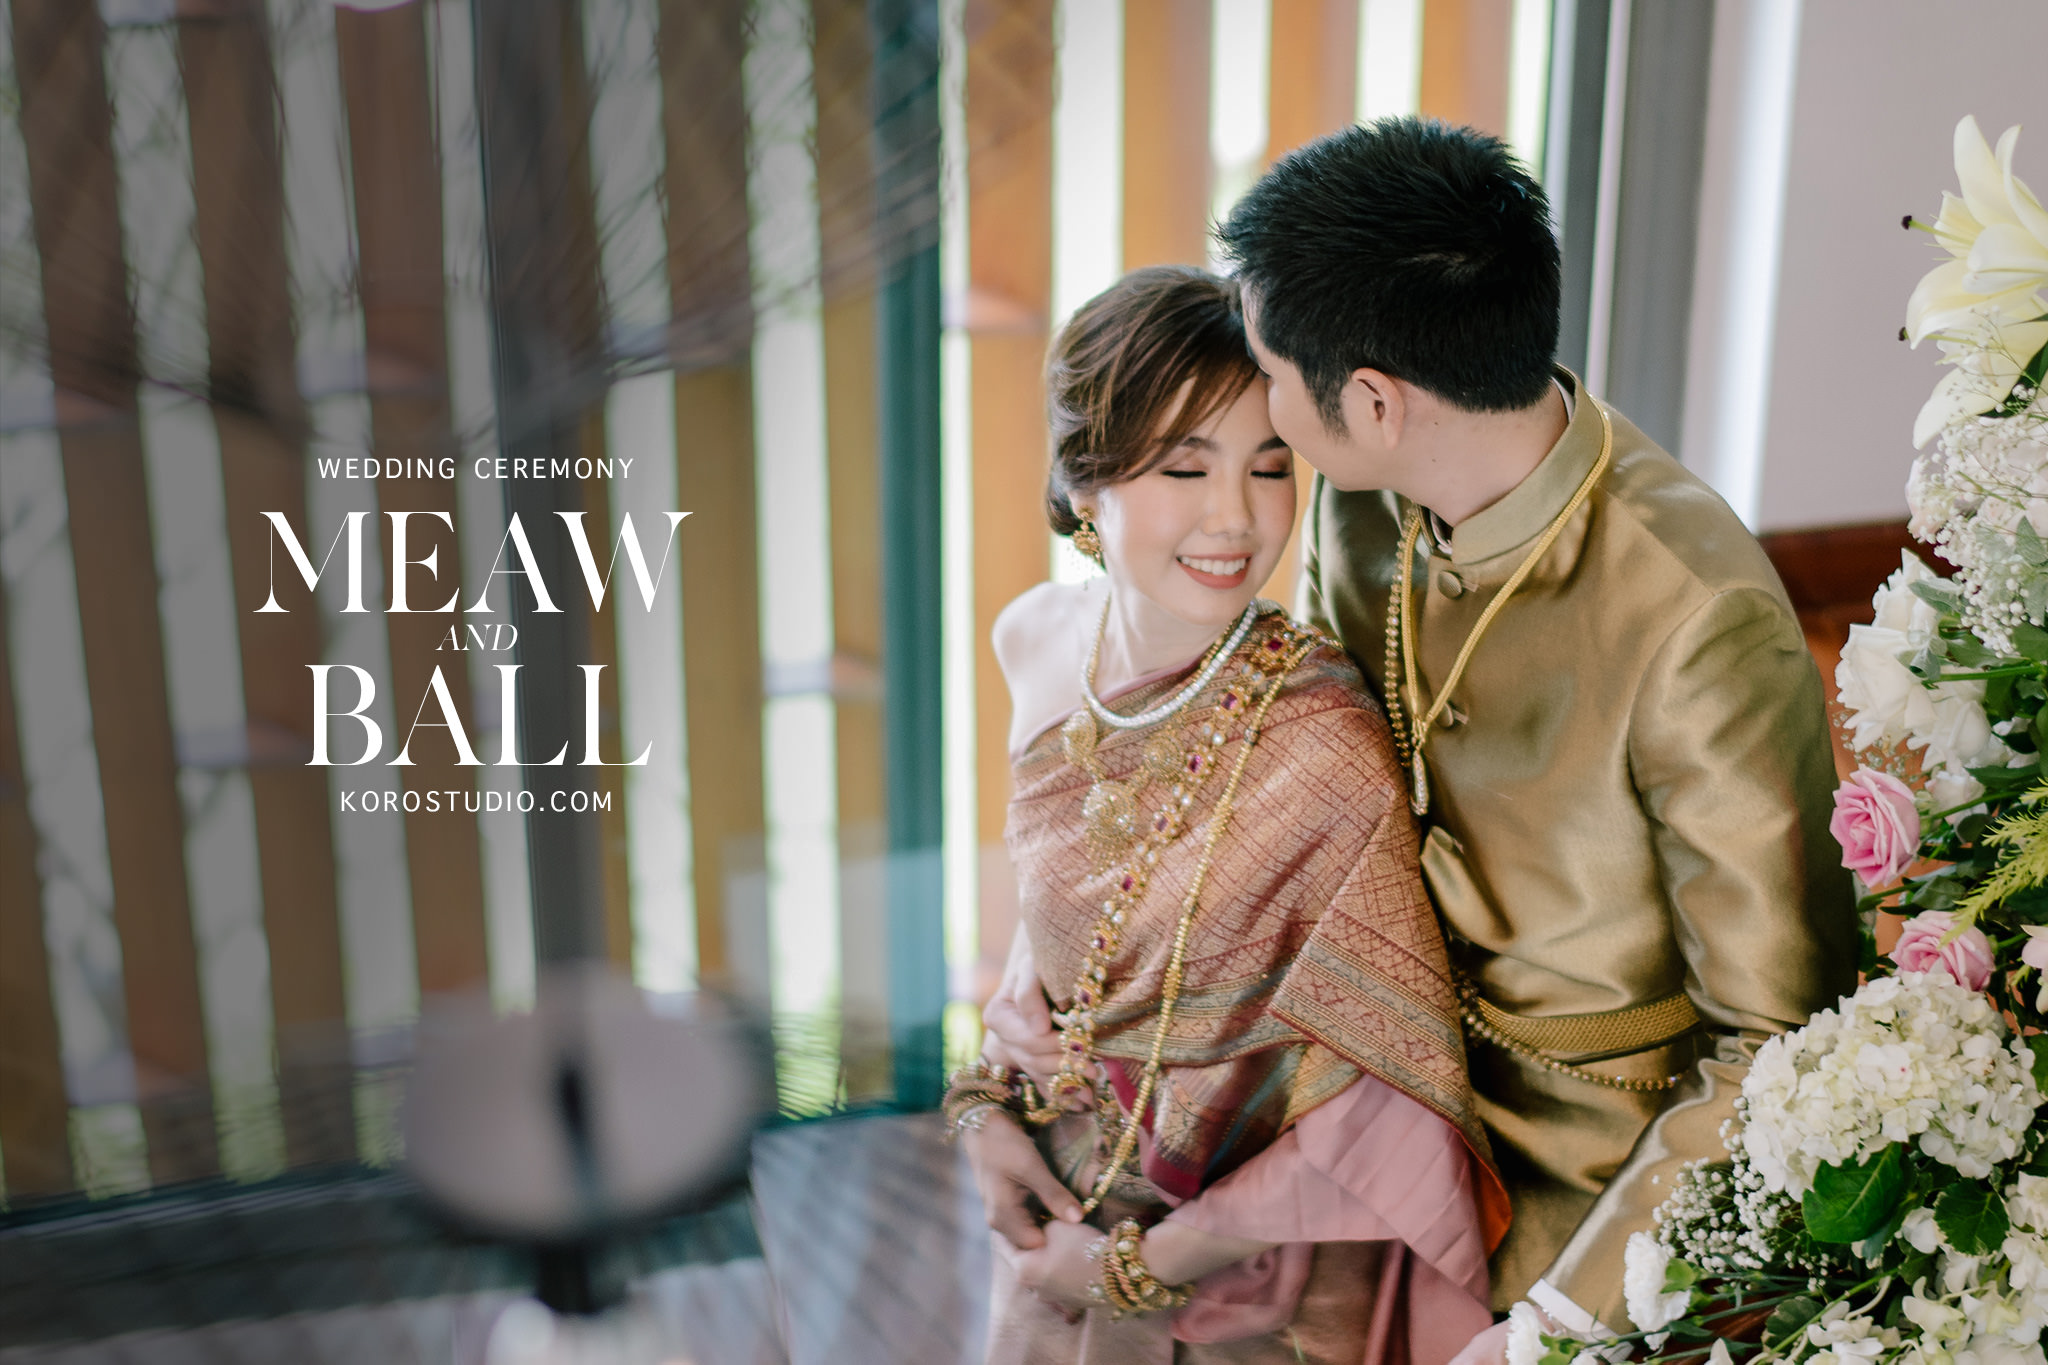 thai wedding at home wedding ceremony cover Wedding at Home Meaw & Ball Thai Wedding Ceremony Photo by Koro Studio